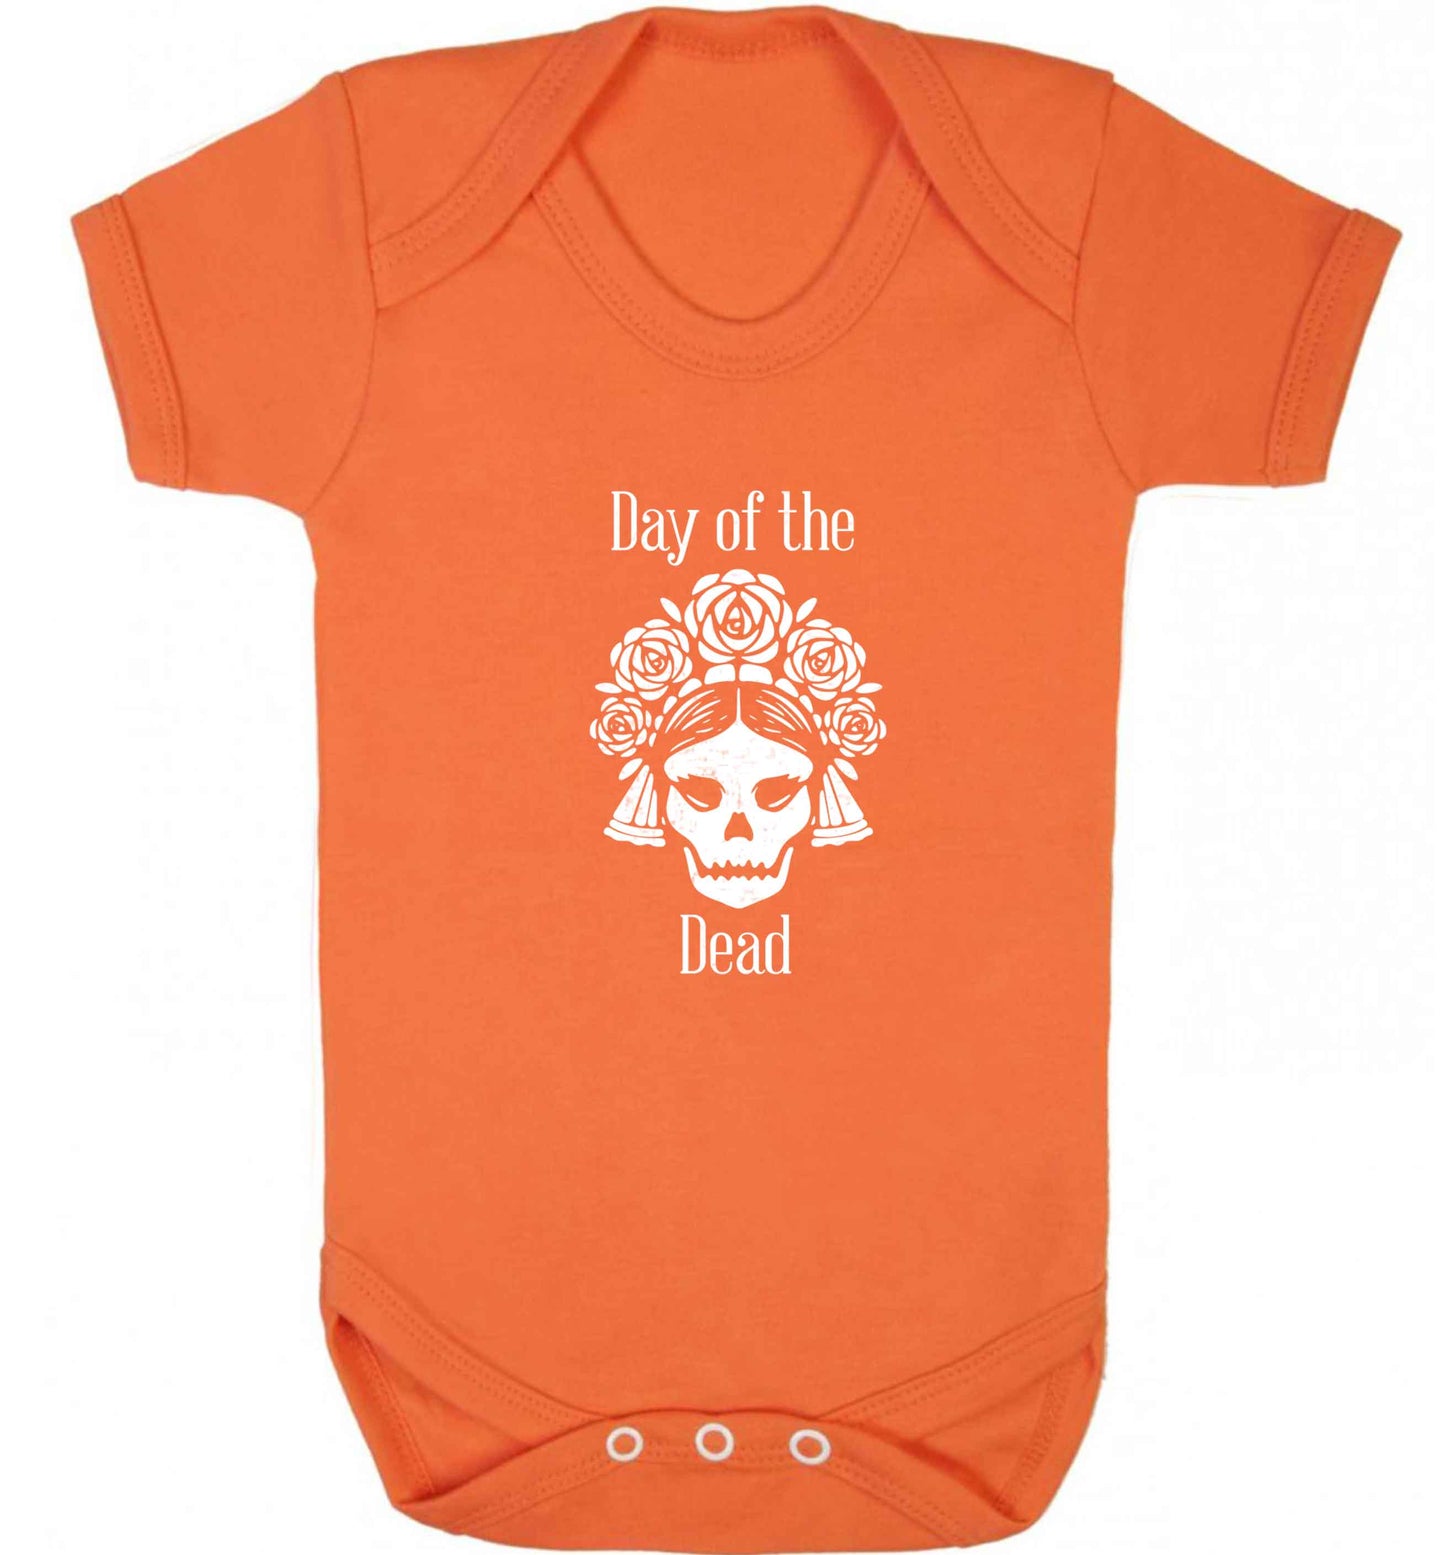 Day of the dead baby vest orange 18-24 months